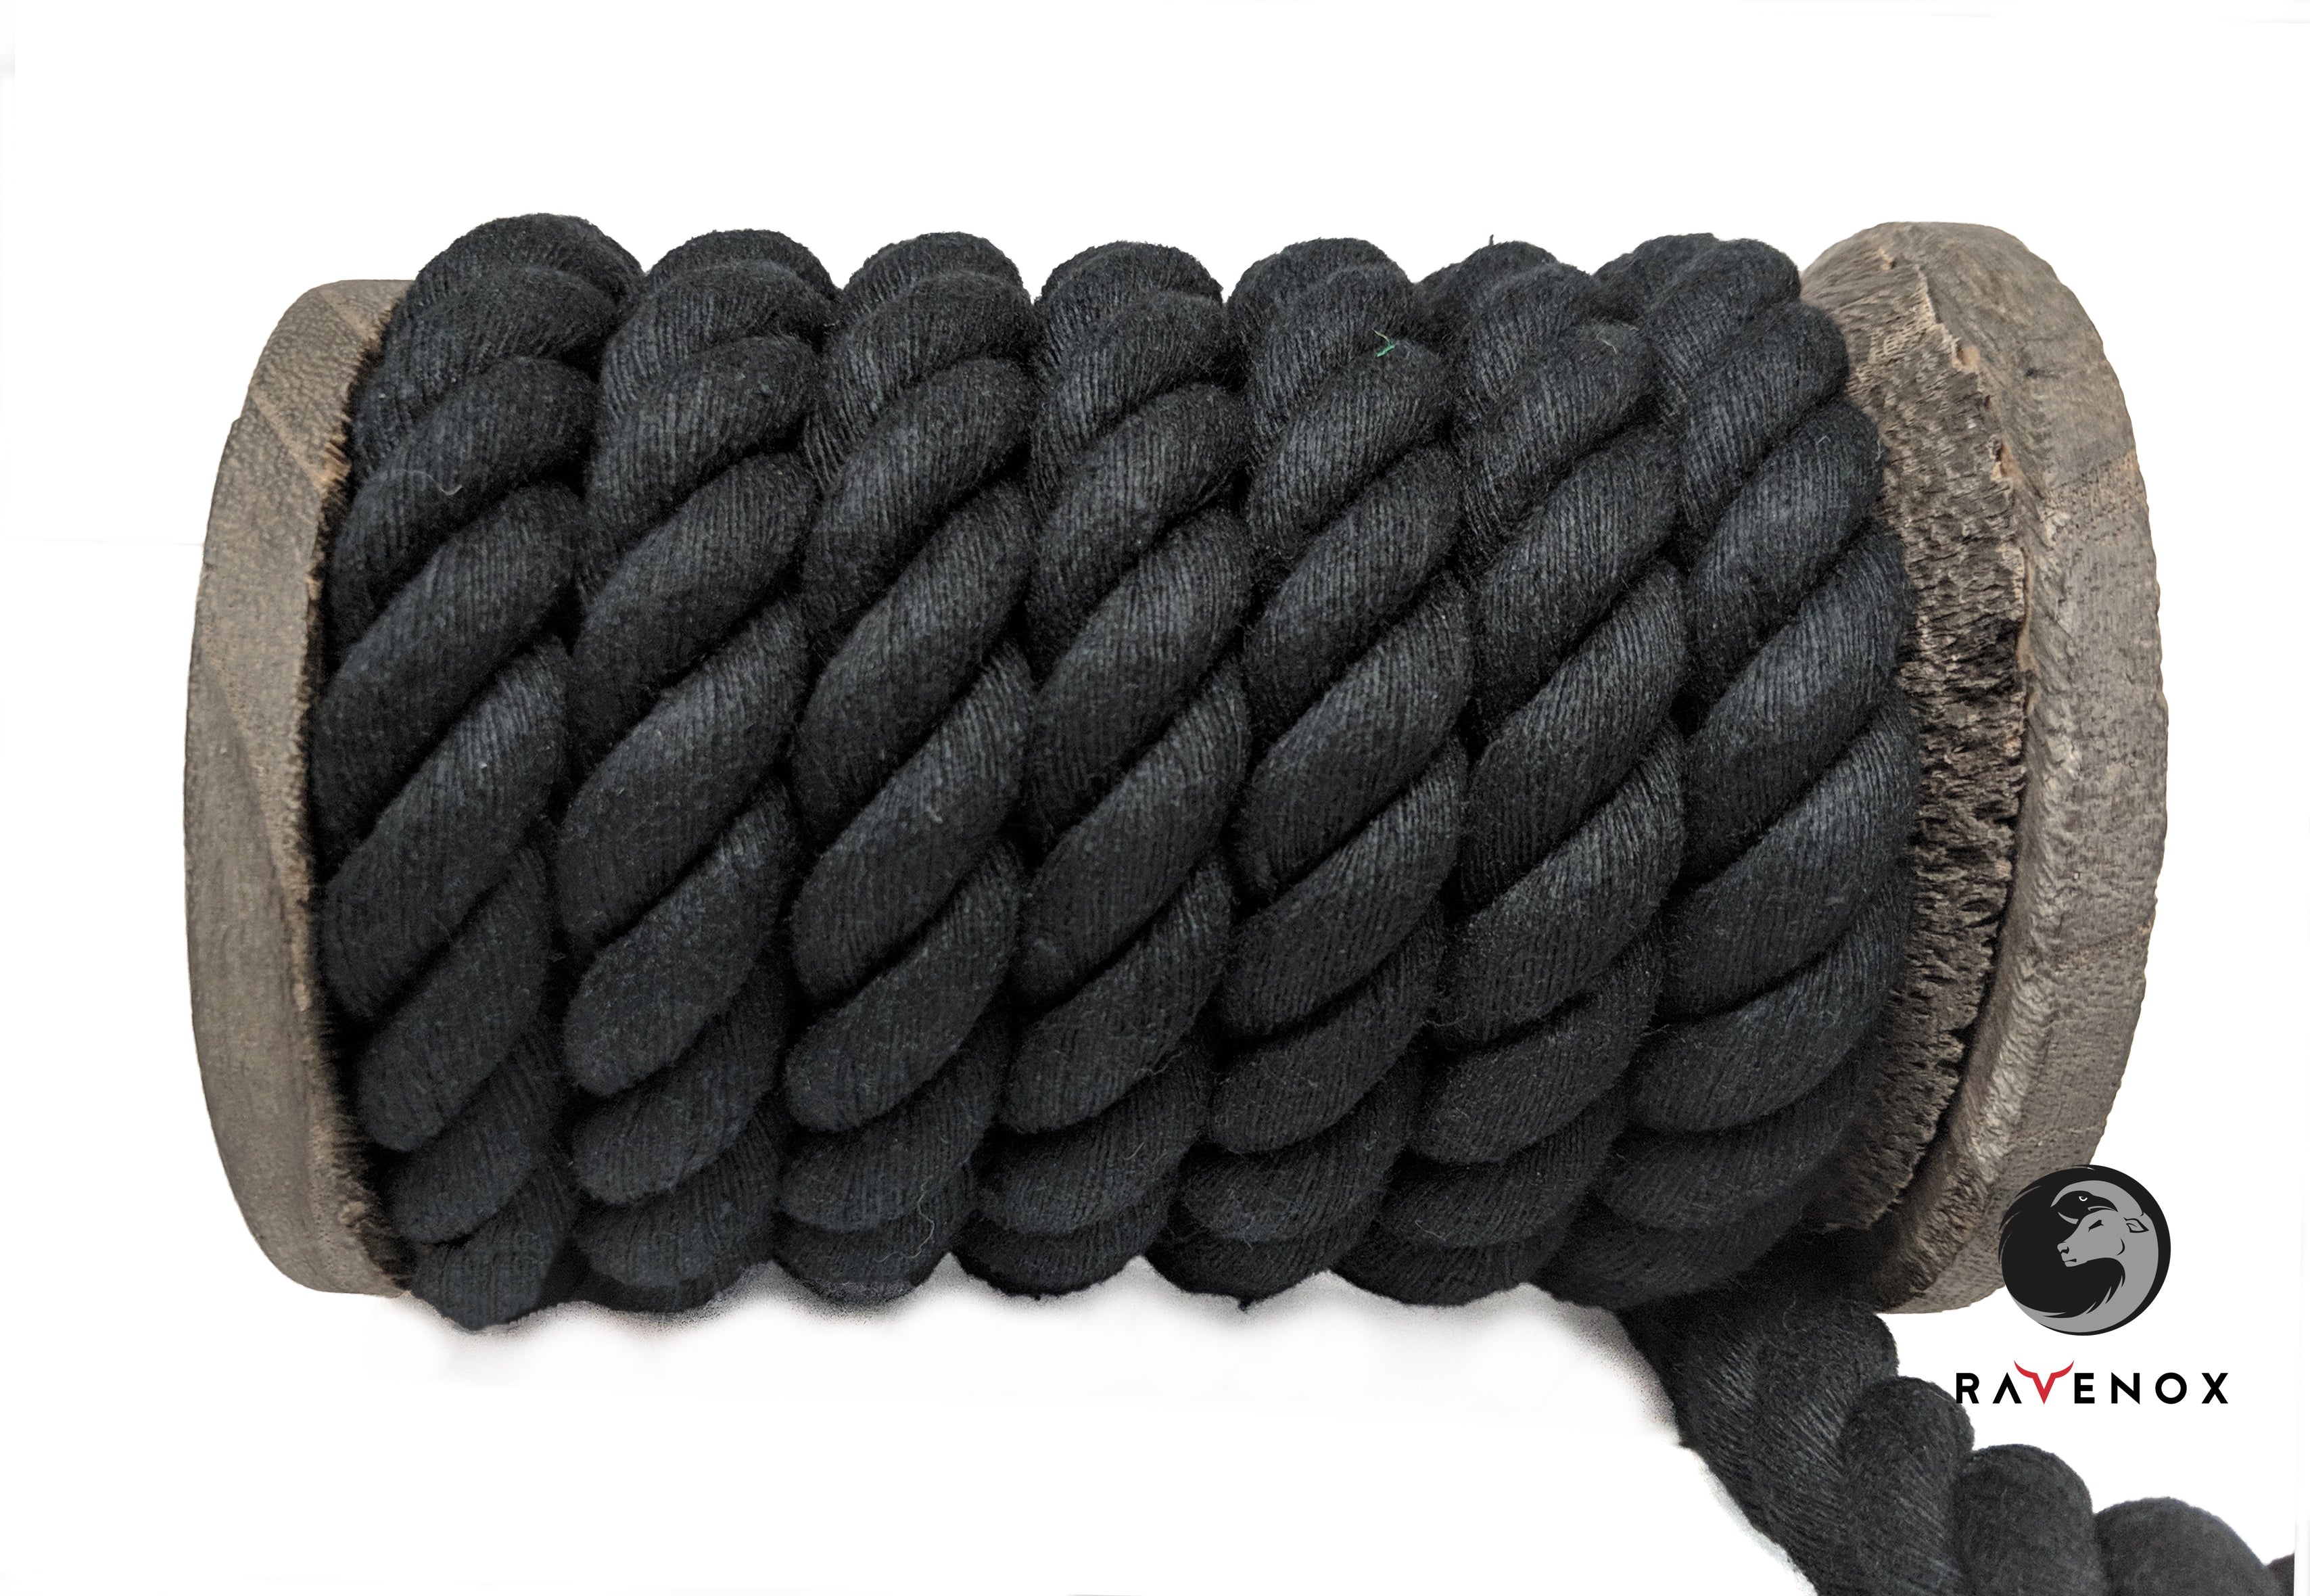 Ravenox Black Twisted Cotton Rope 